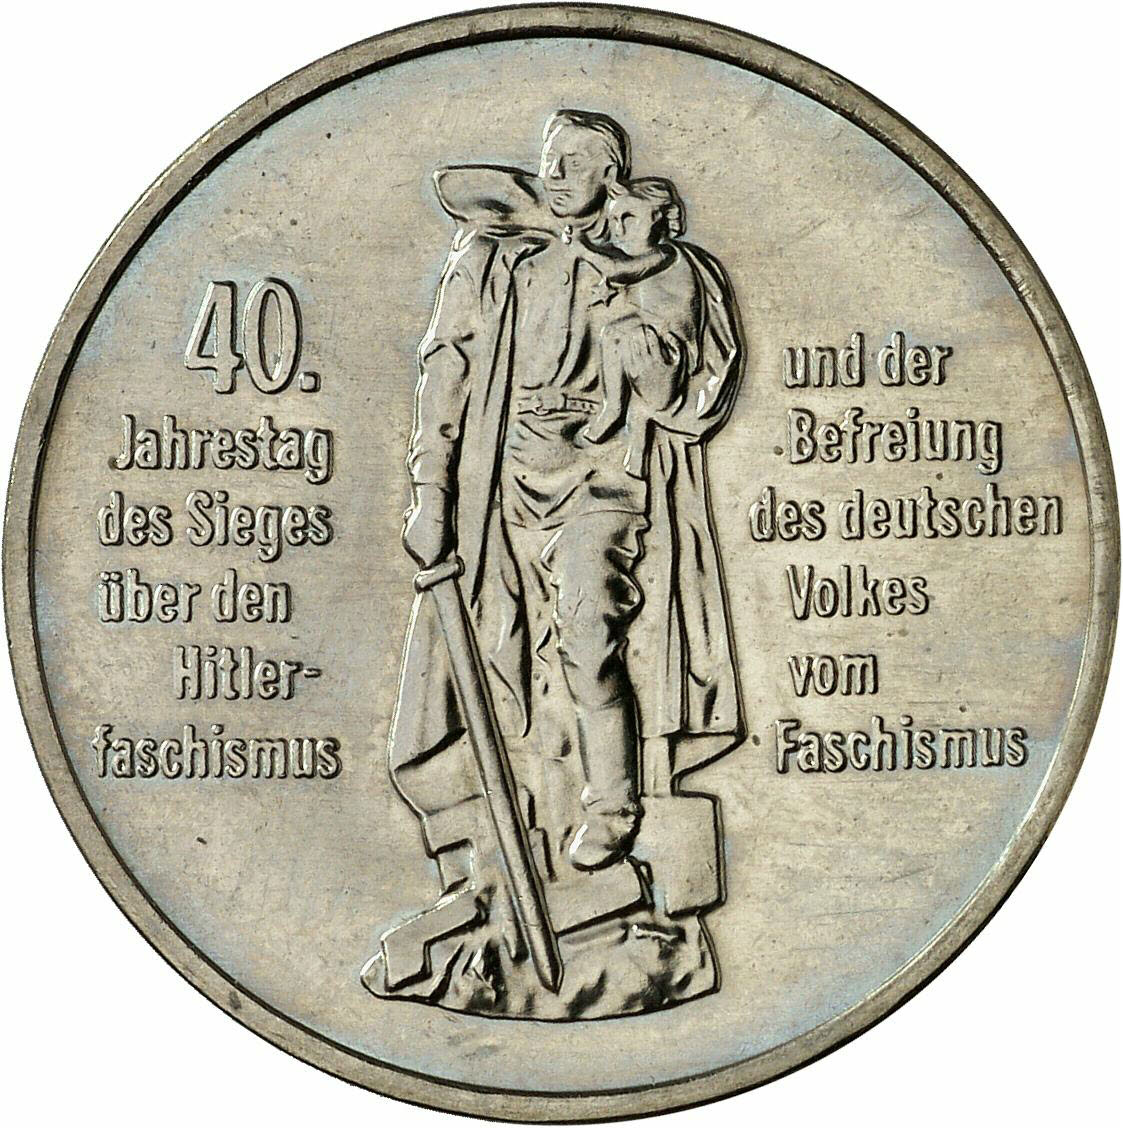 DE 10 Mark der DDR 1985 A